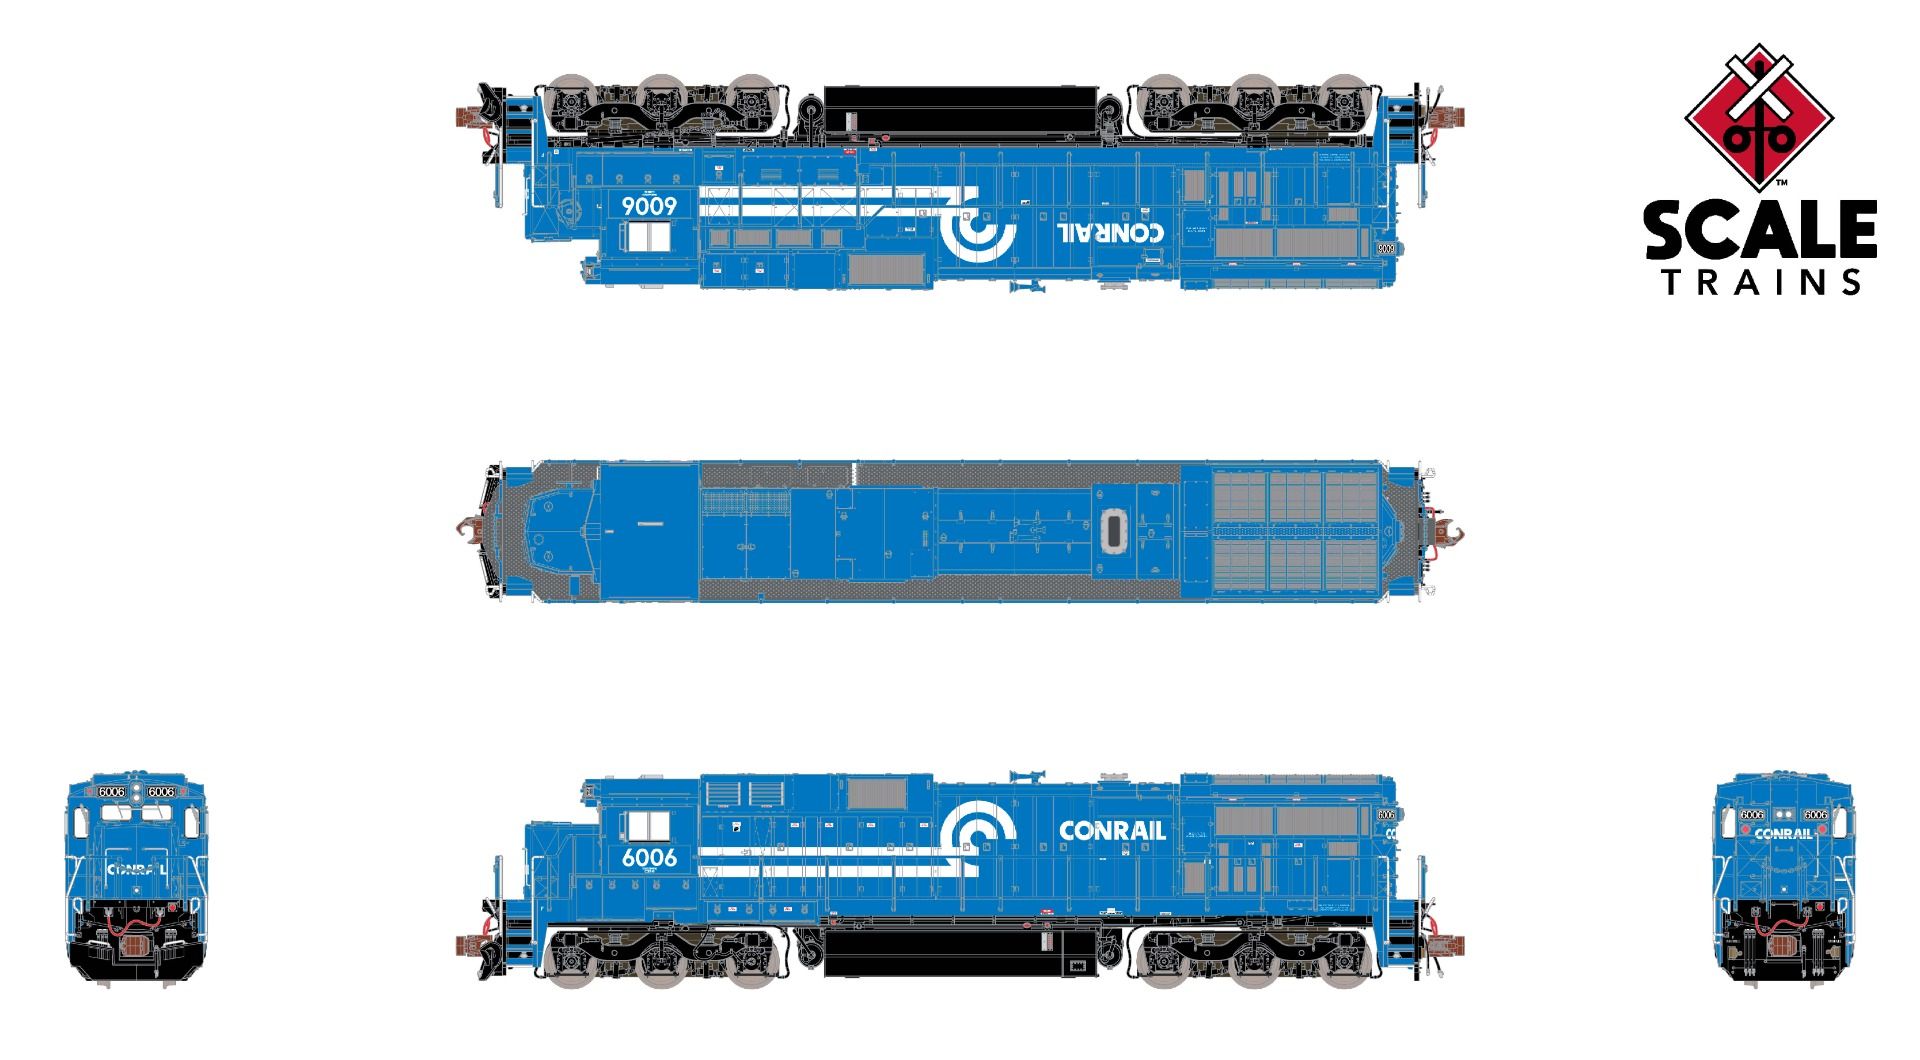 ScaleTrains Rivet Counter N SXT39180 DCC Ready GE C39-8 Locomotive Phase III Conrail '1990s Era' CR #6021